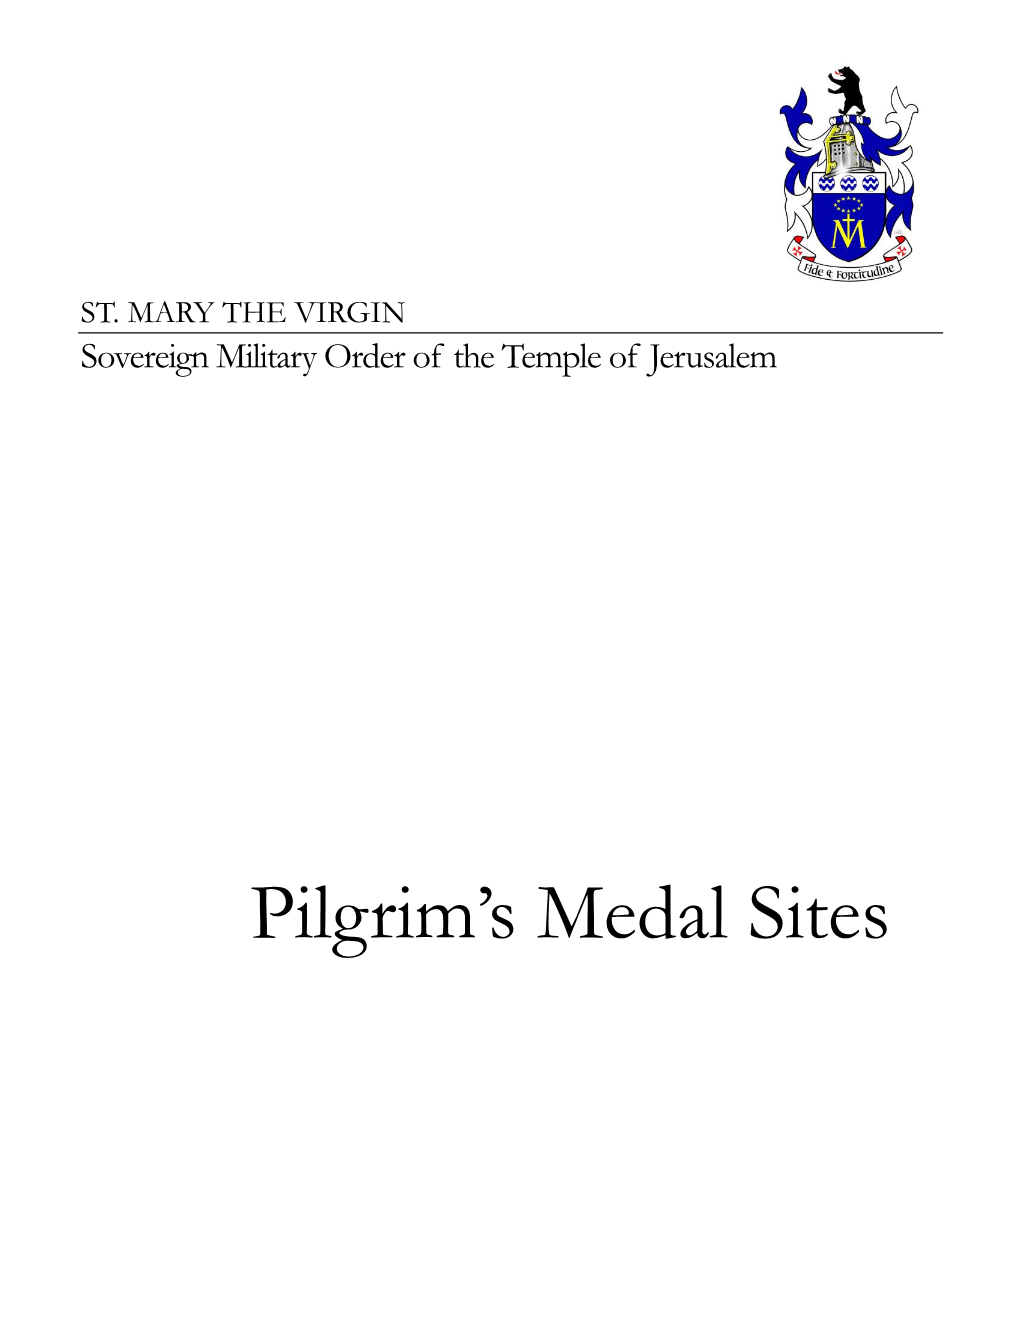 Pilgrim's Medal Sites